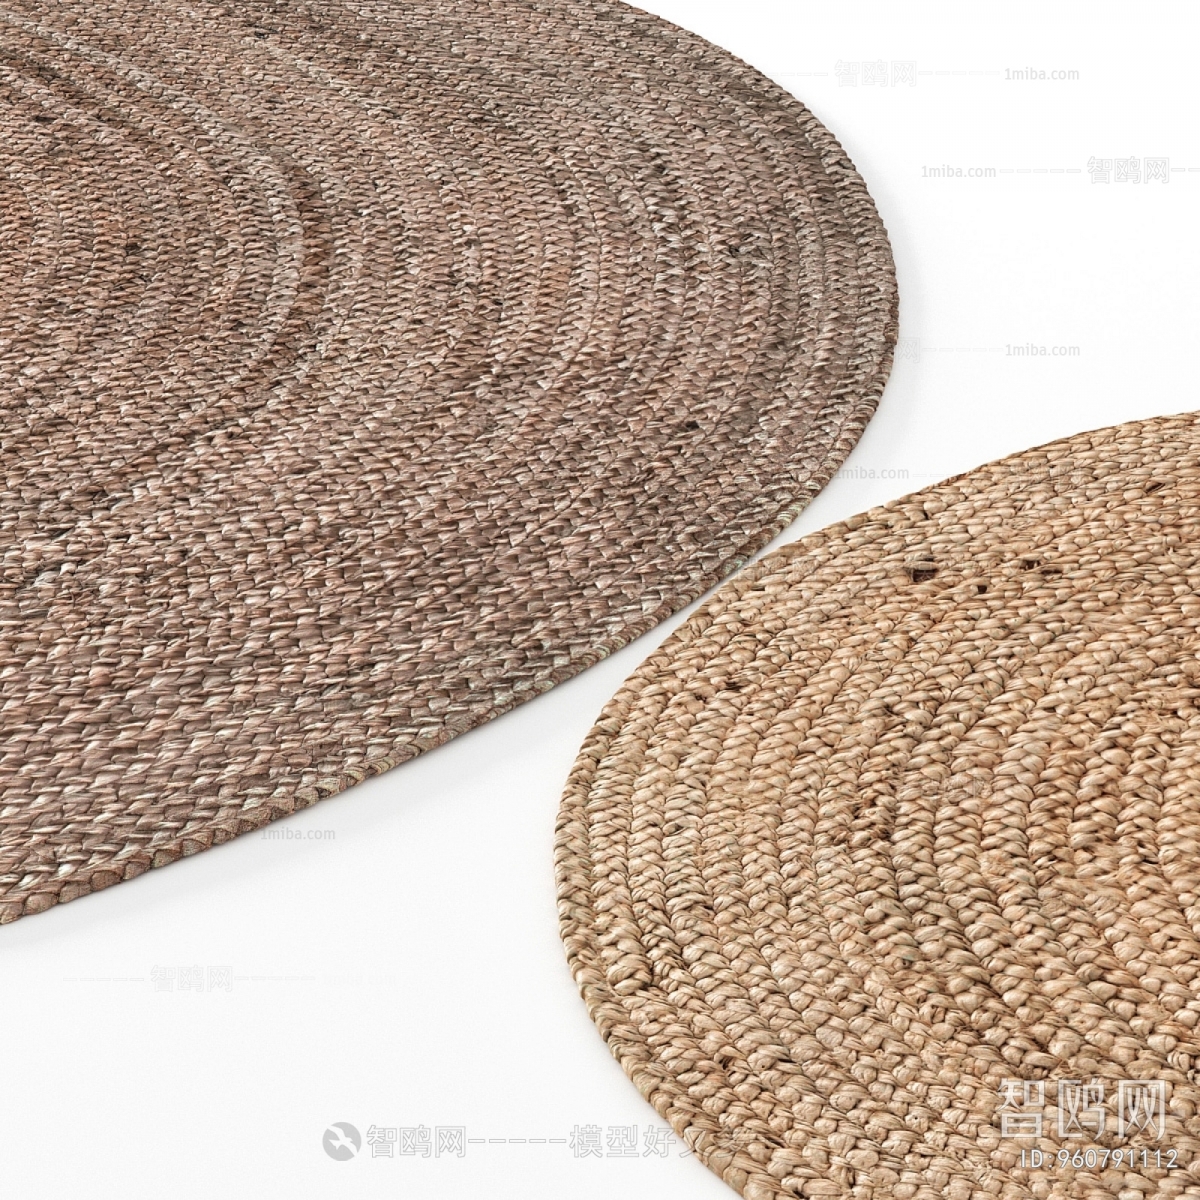 Wabi-sabi Style Circular Carpet